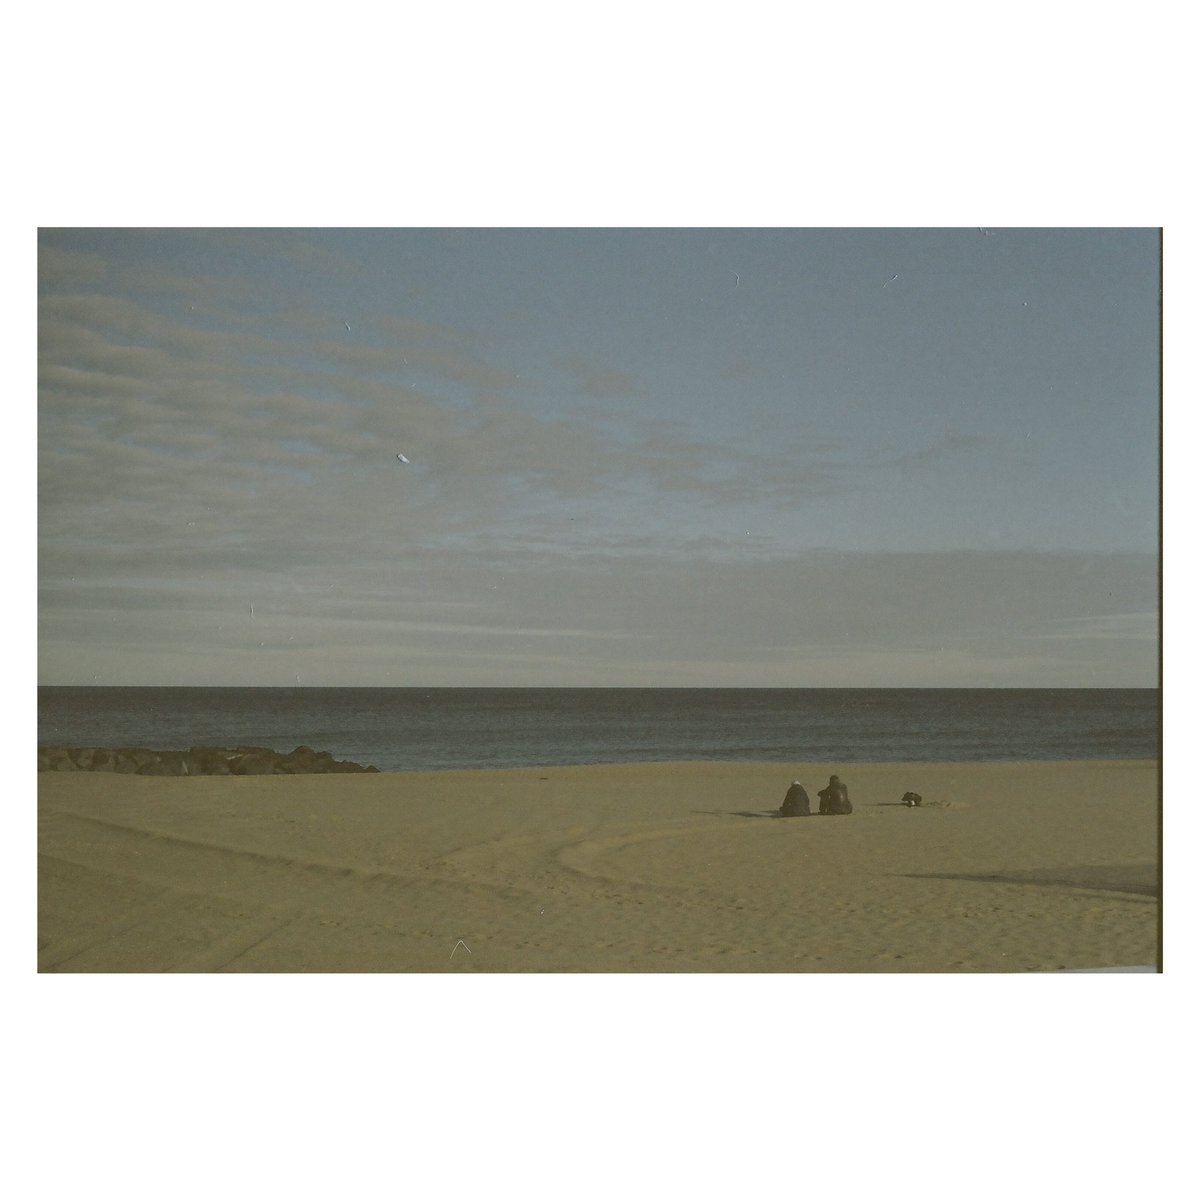 #expiredfilm #filmphotography #filmstreetphotography #beach #35mm #asburypark #asburyparknj #njphotography #nj #filmphotographer